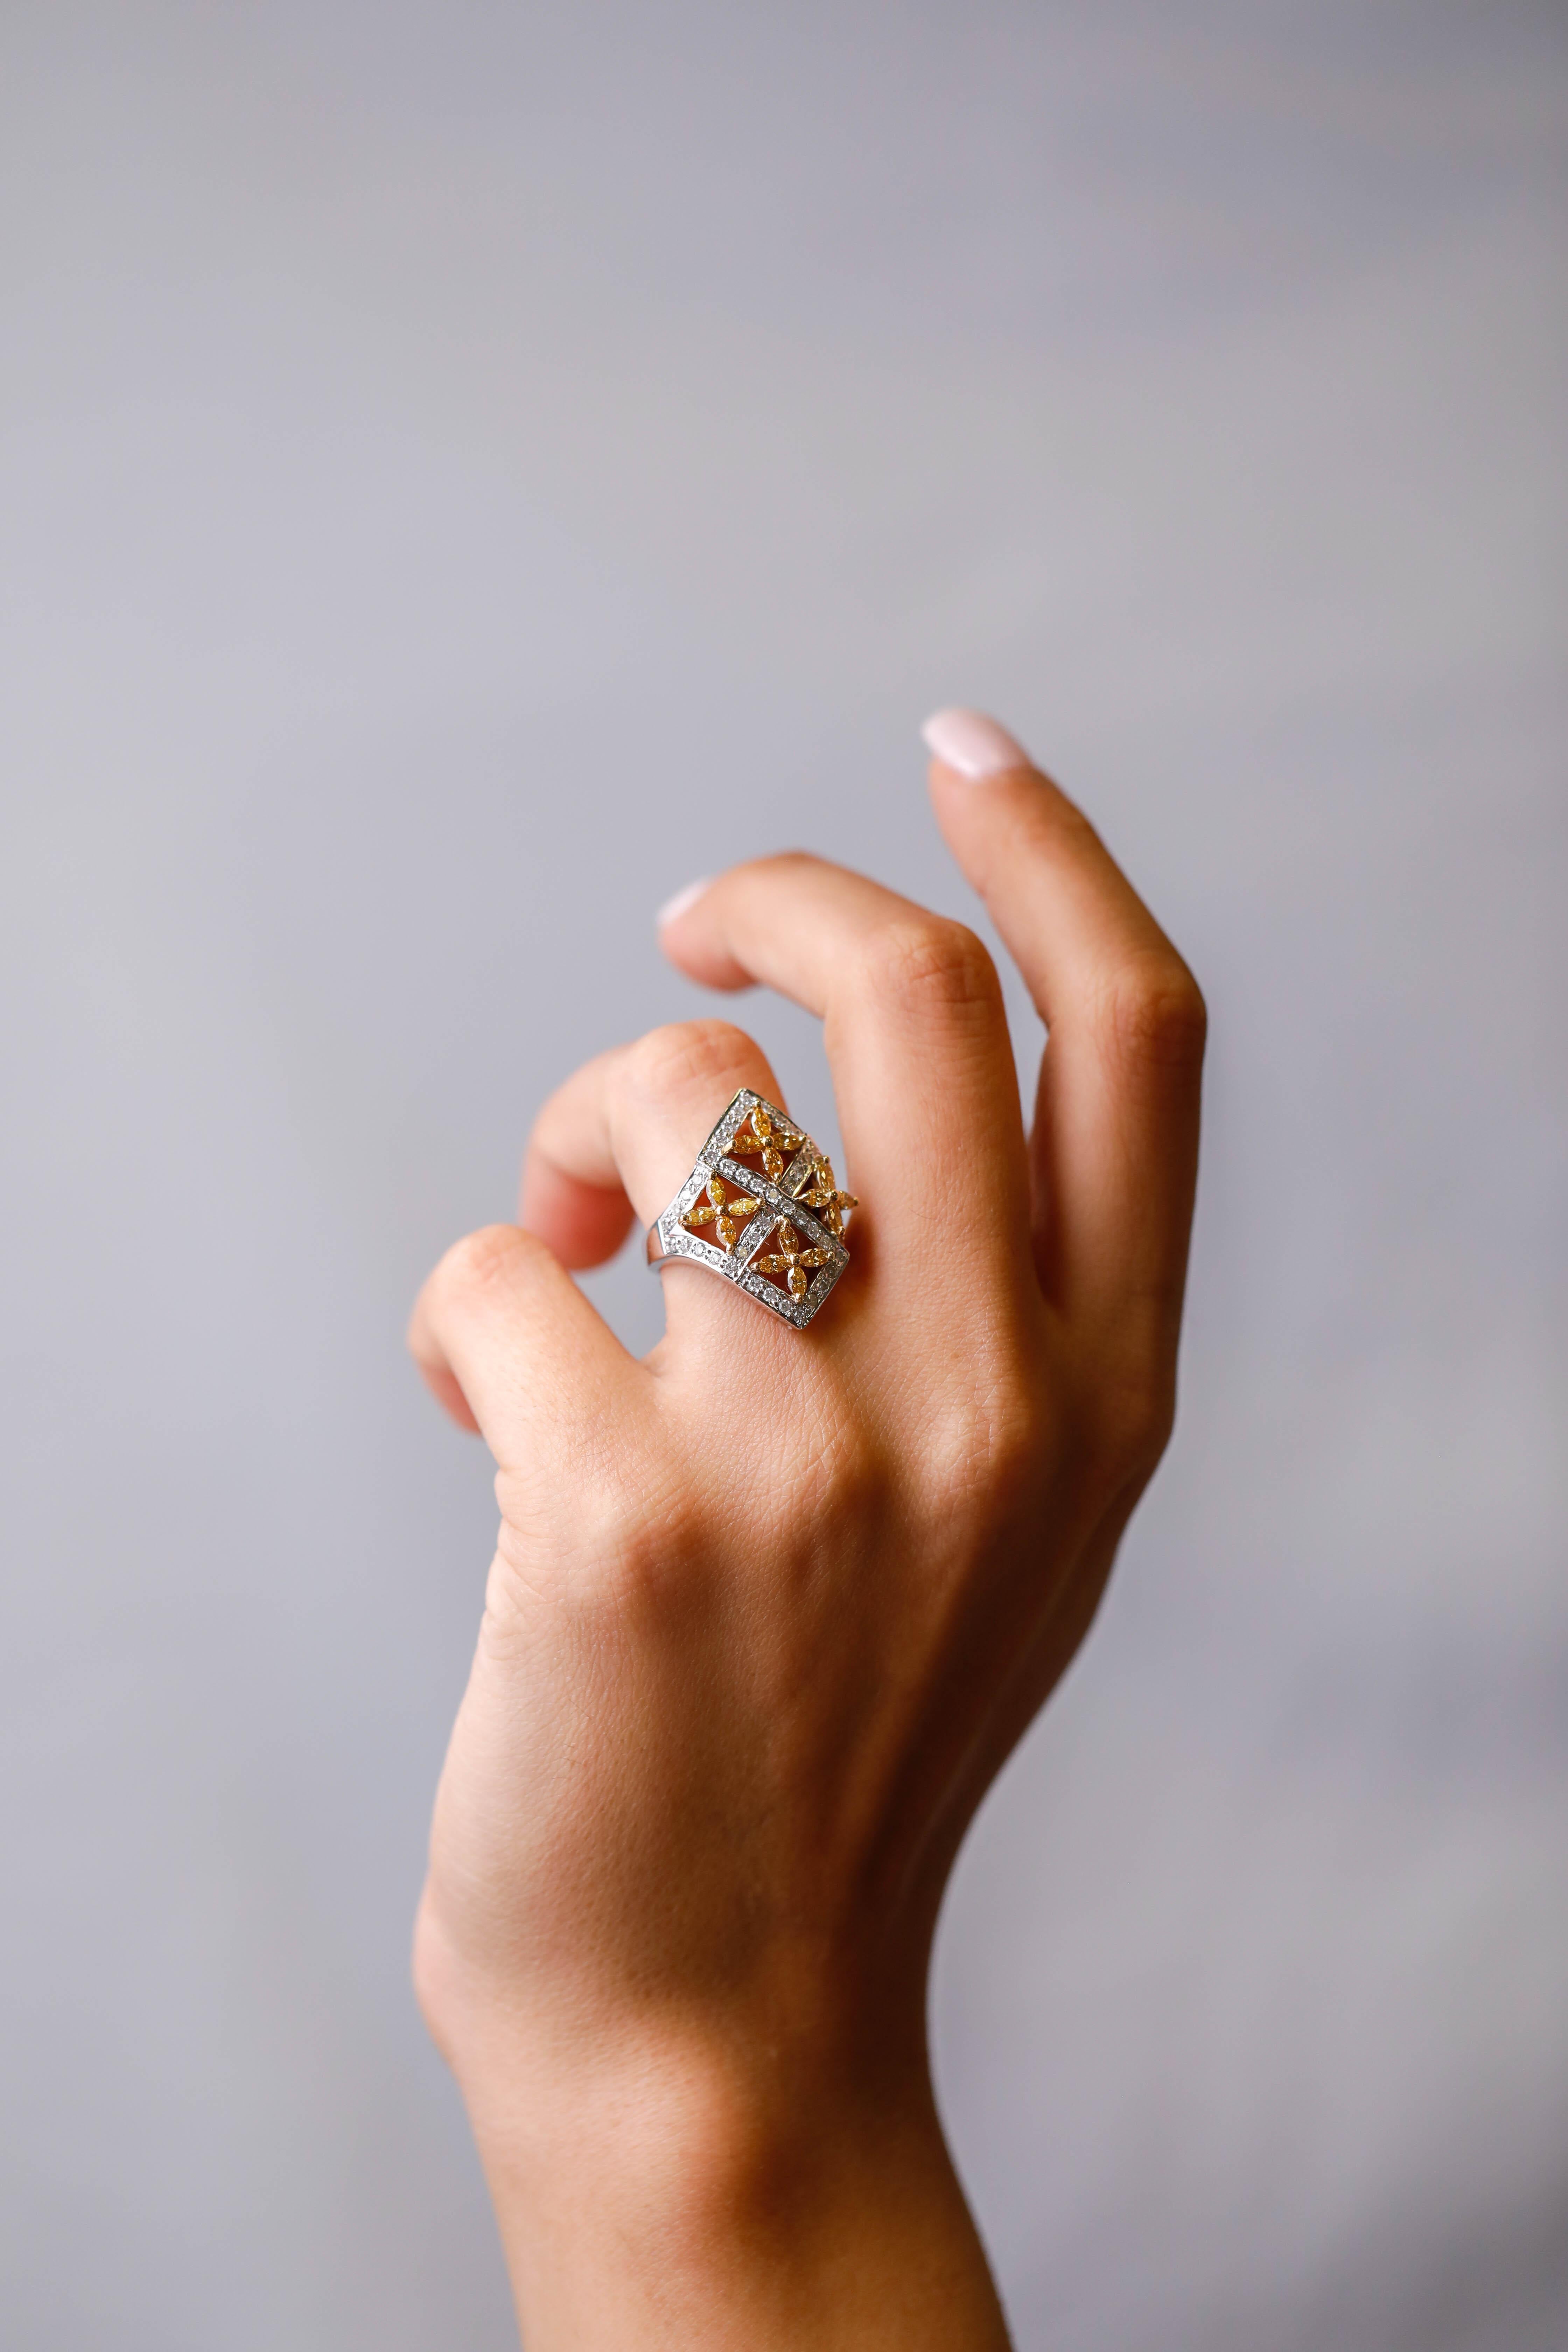 Contemporary 14 Karat White Gold 1.75 Carat Round Diamond Designer Ring by Natalie K. For Sale